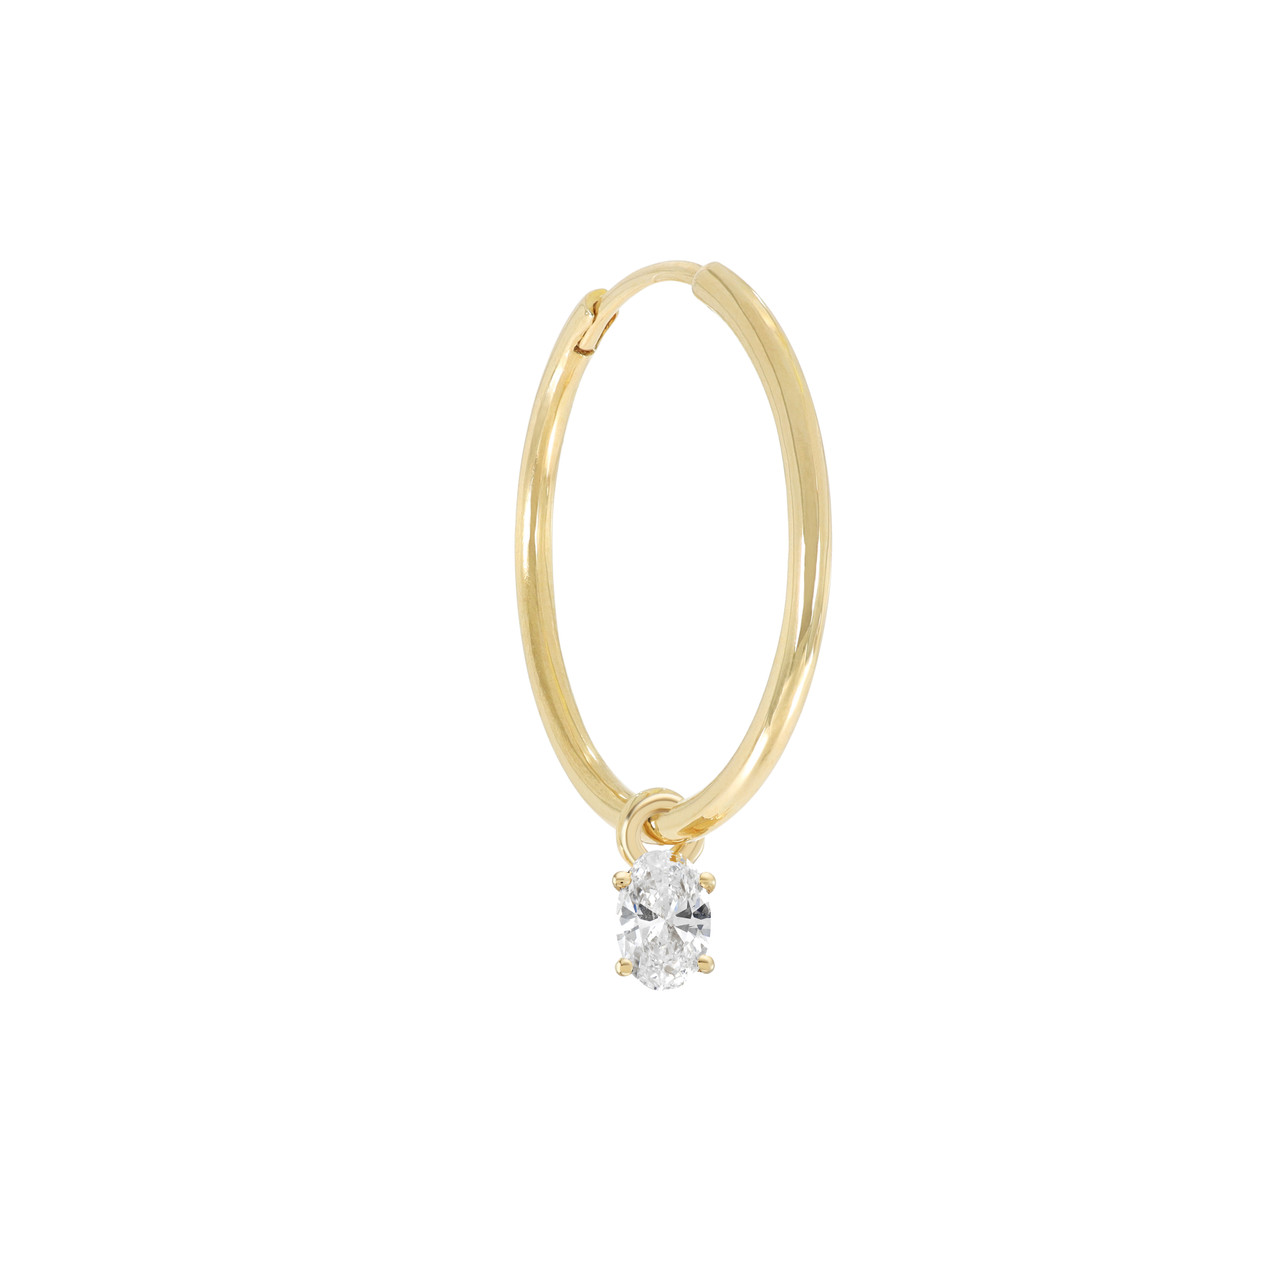 tomfoolery jewellery gallery: Oval Diamond Hoop Single Earring by metier by tomfoolery